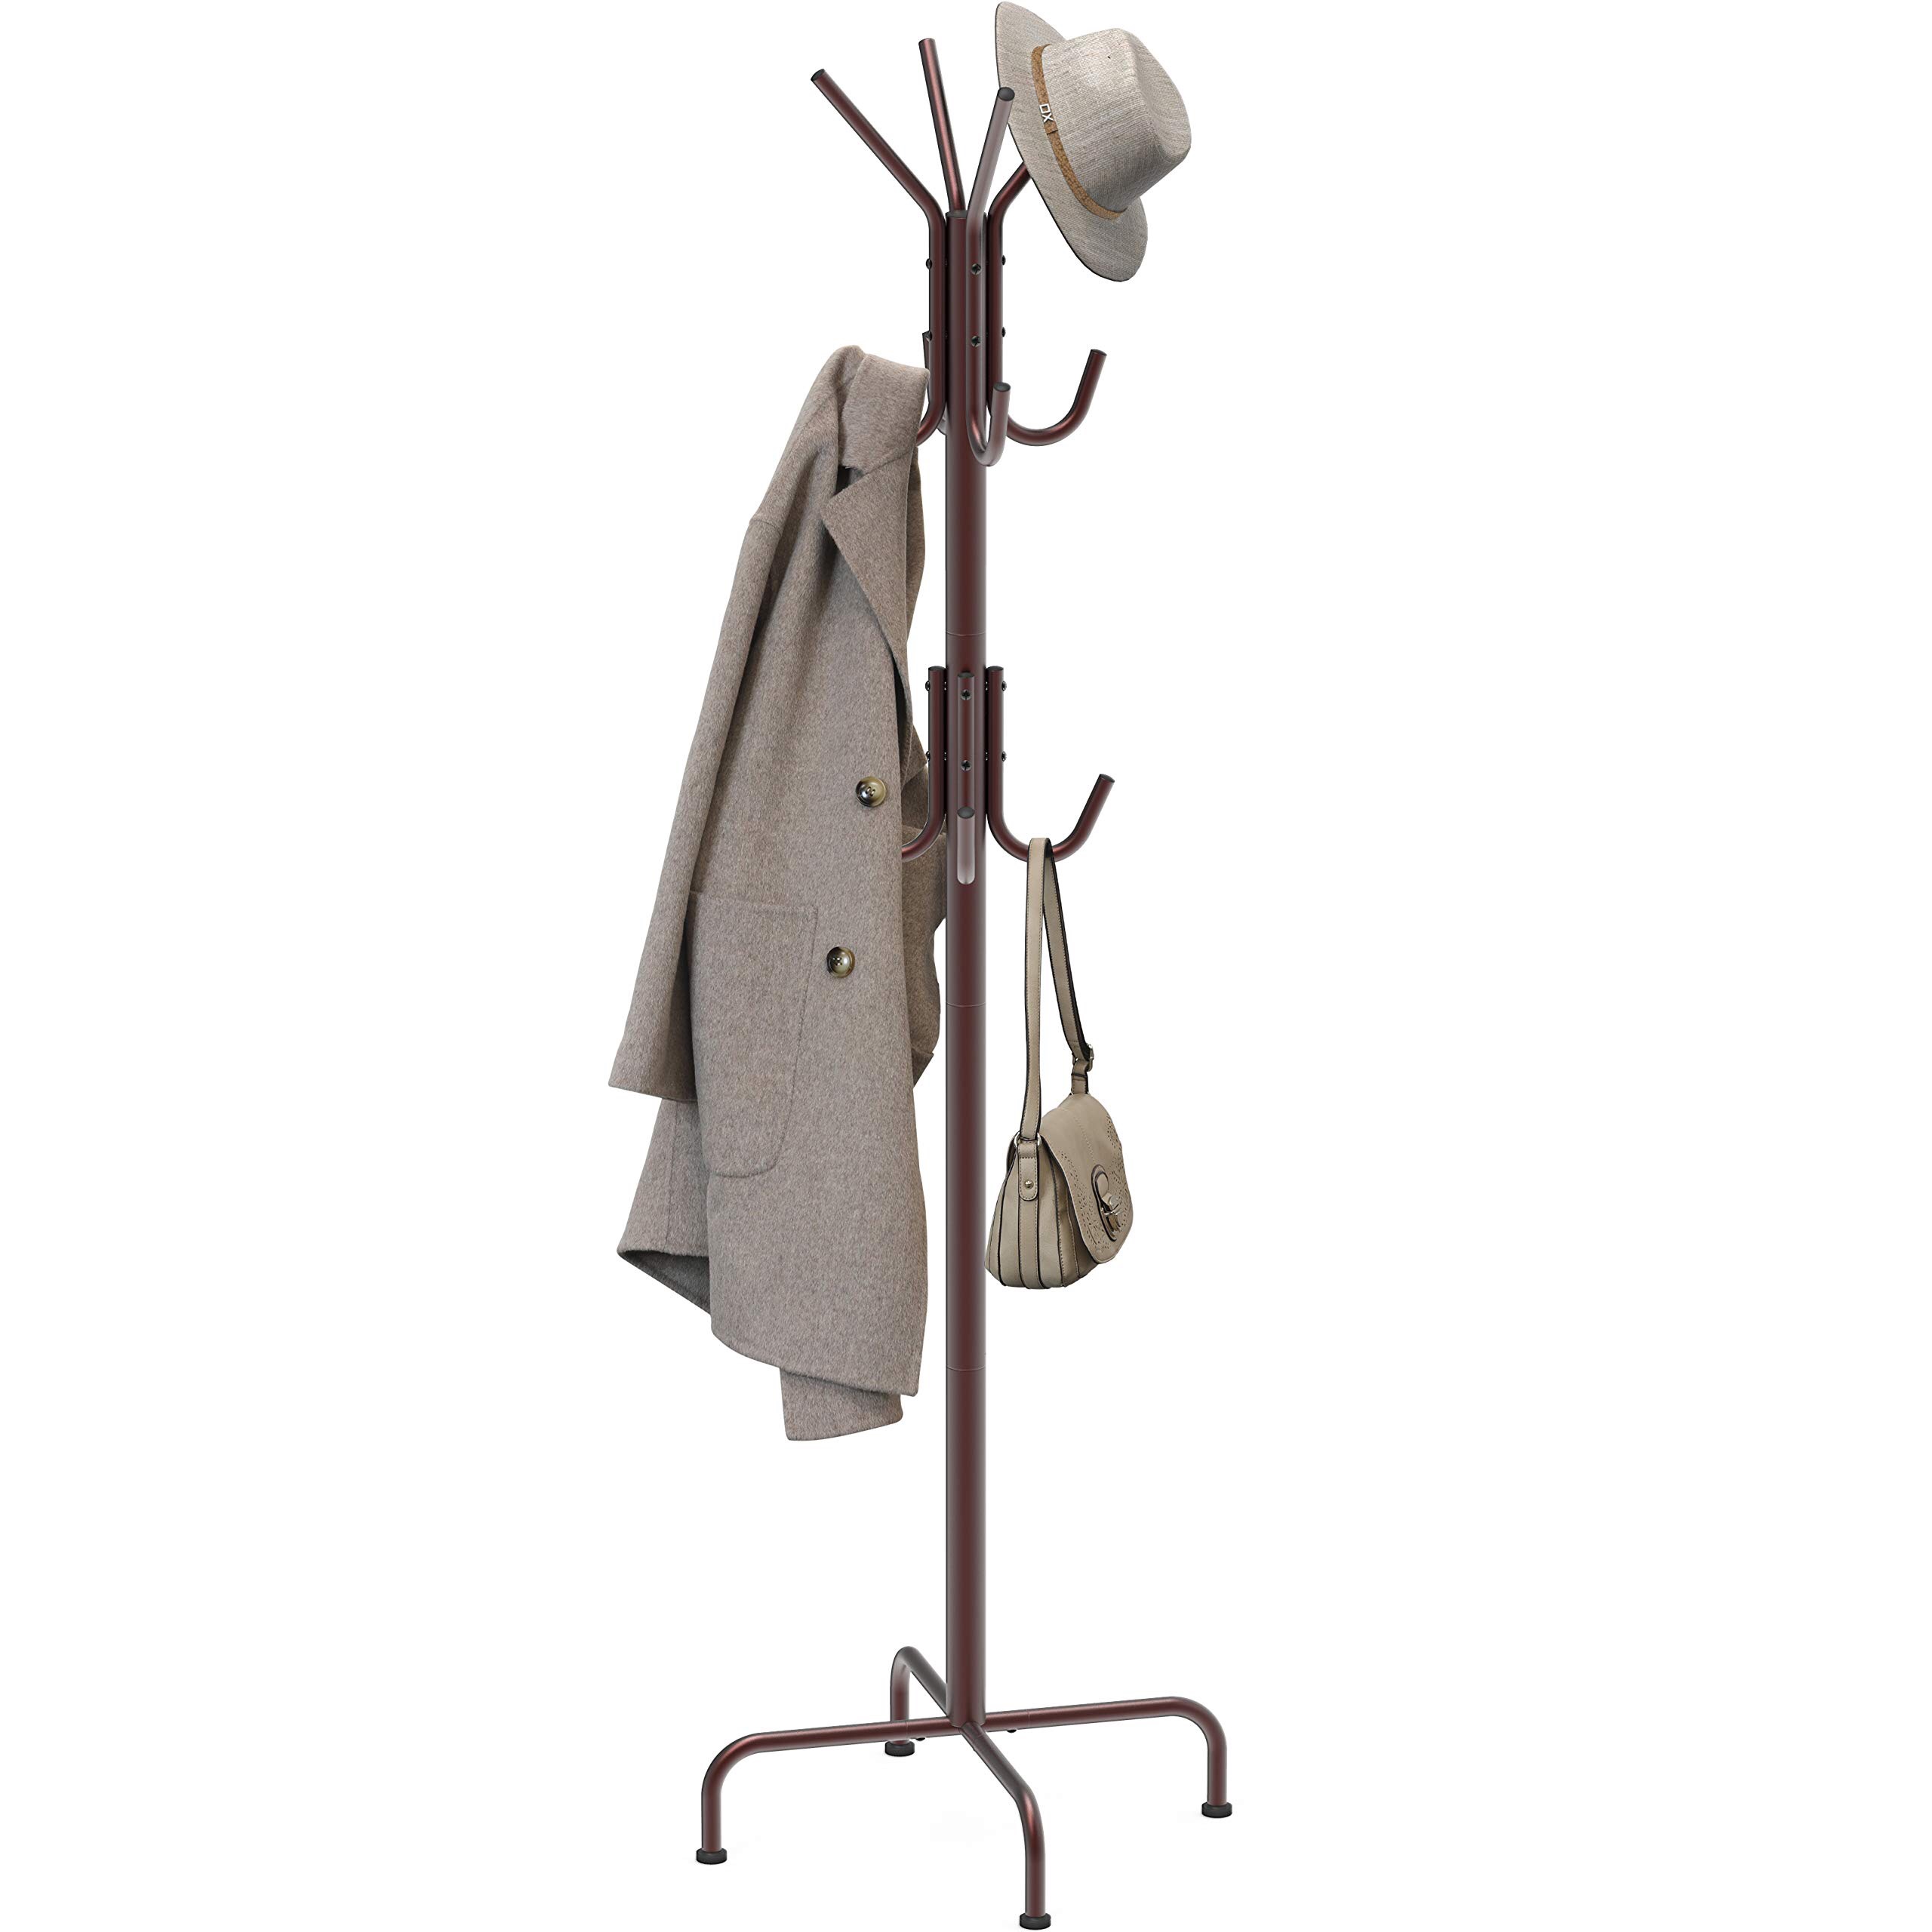 Amazon.com: Simple Houseware Standing Coat and Hat Hanger Organizer Rack, Bronze : Home & Kitchen